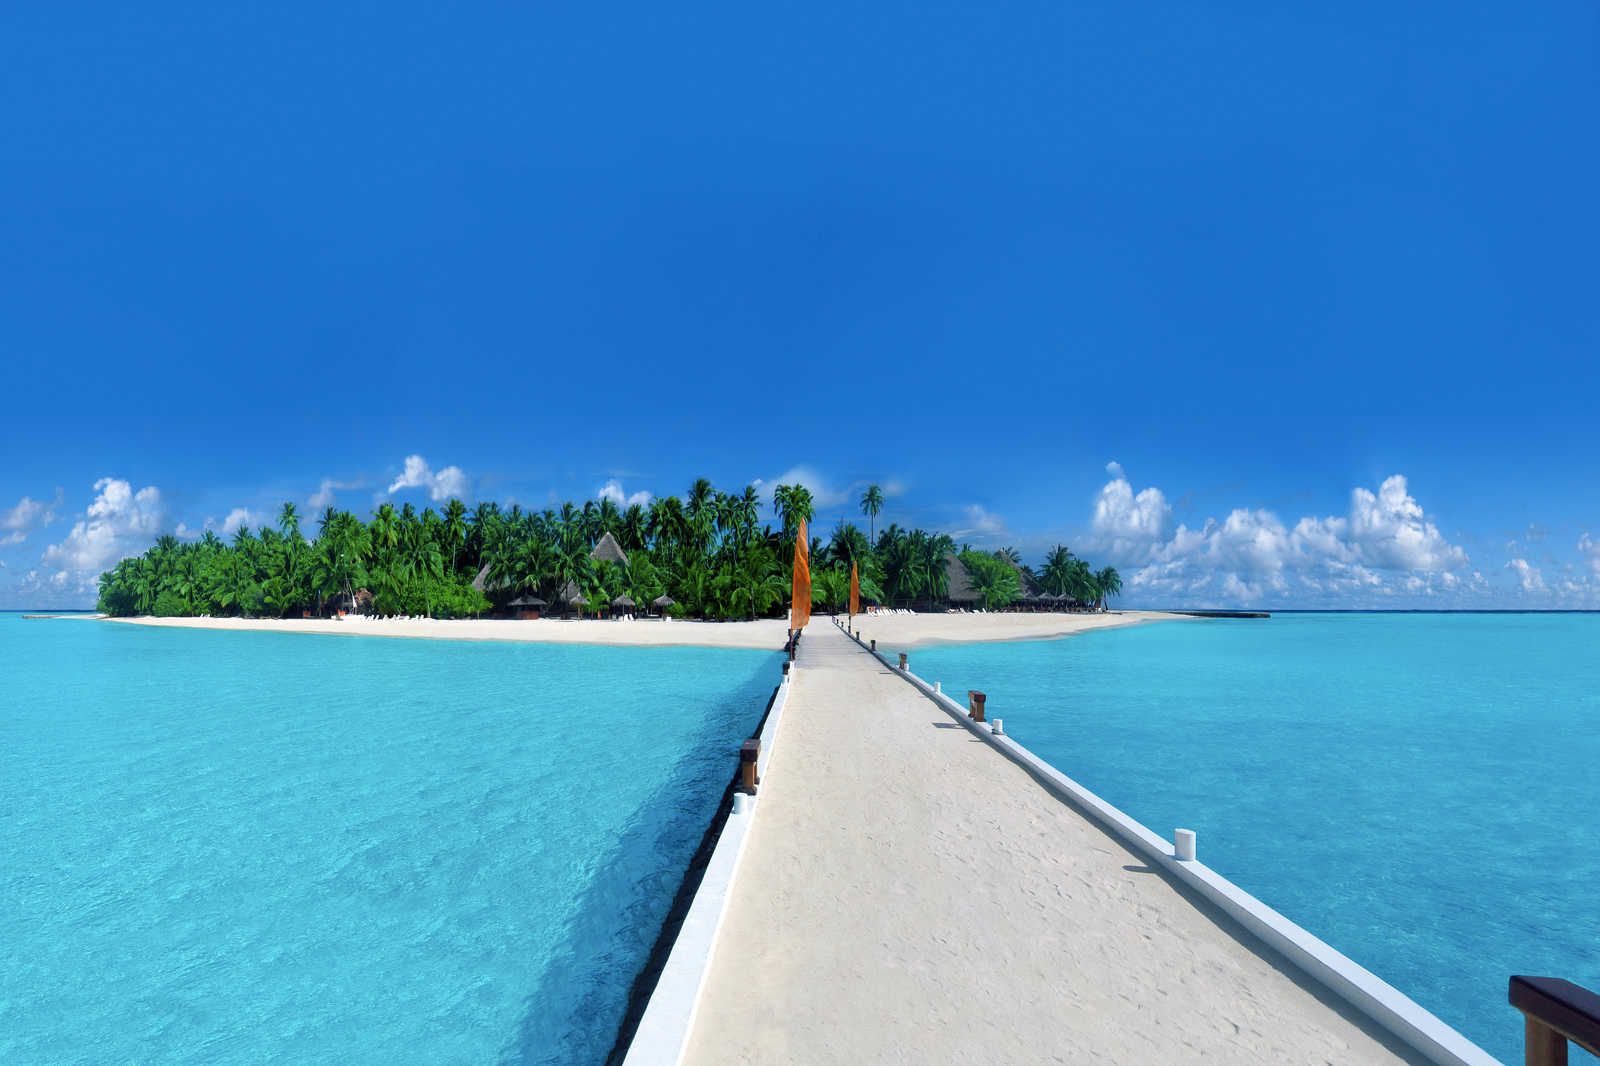             Cuadro Isla con embarcadero a la playa - 0,90 m x 0,60 m
        